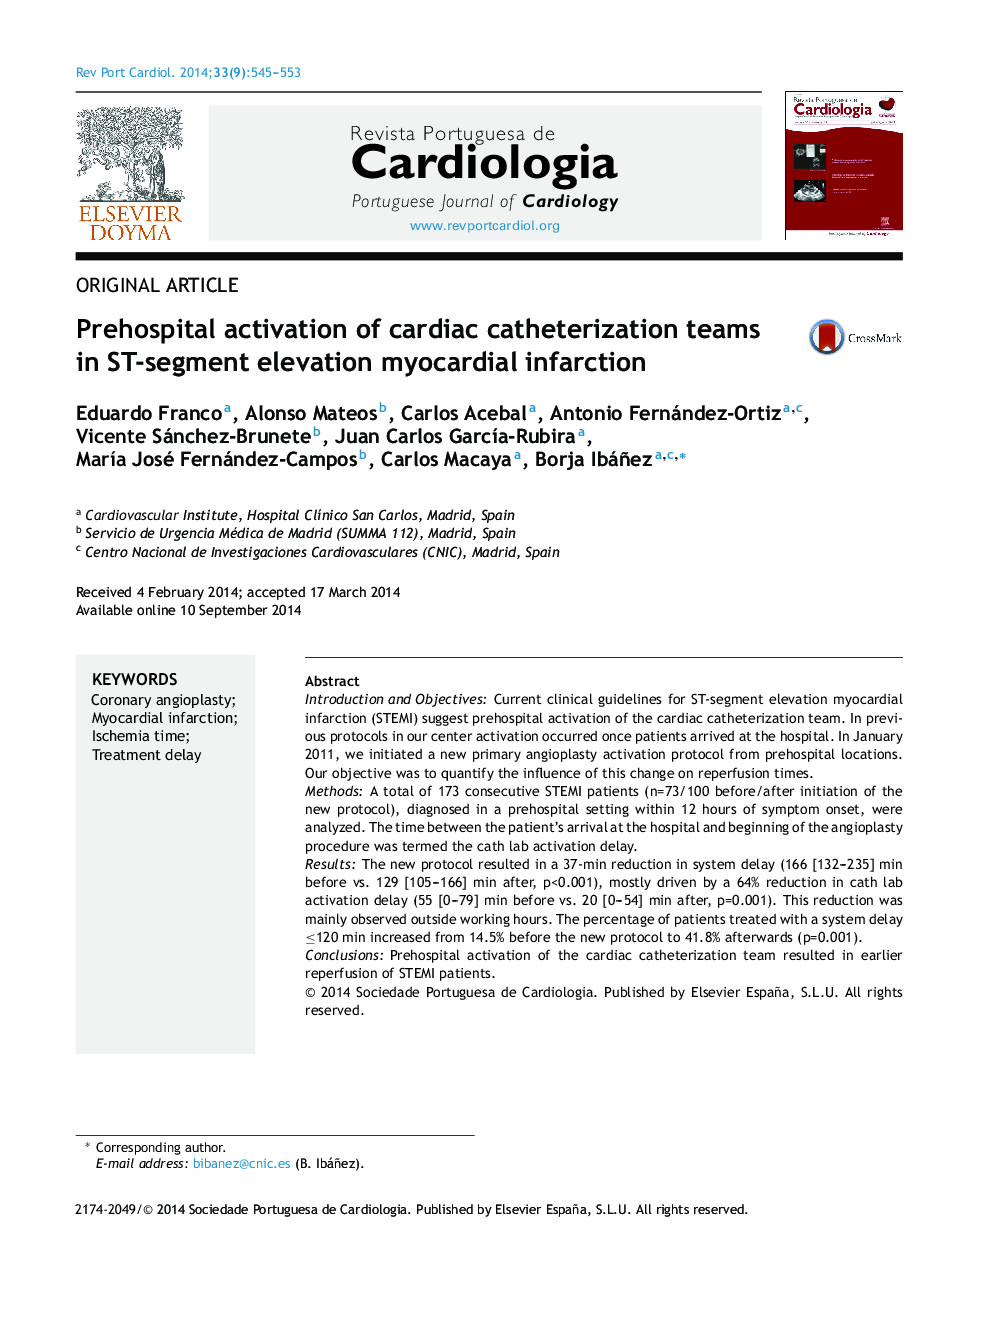 Prehospital activation of cardiac catheterization teams in ST-segment elevation myocardial infarction 